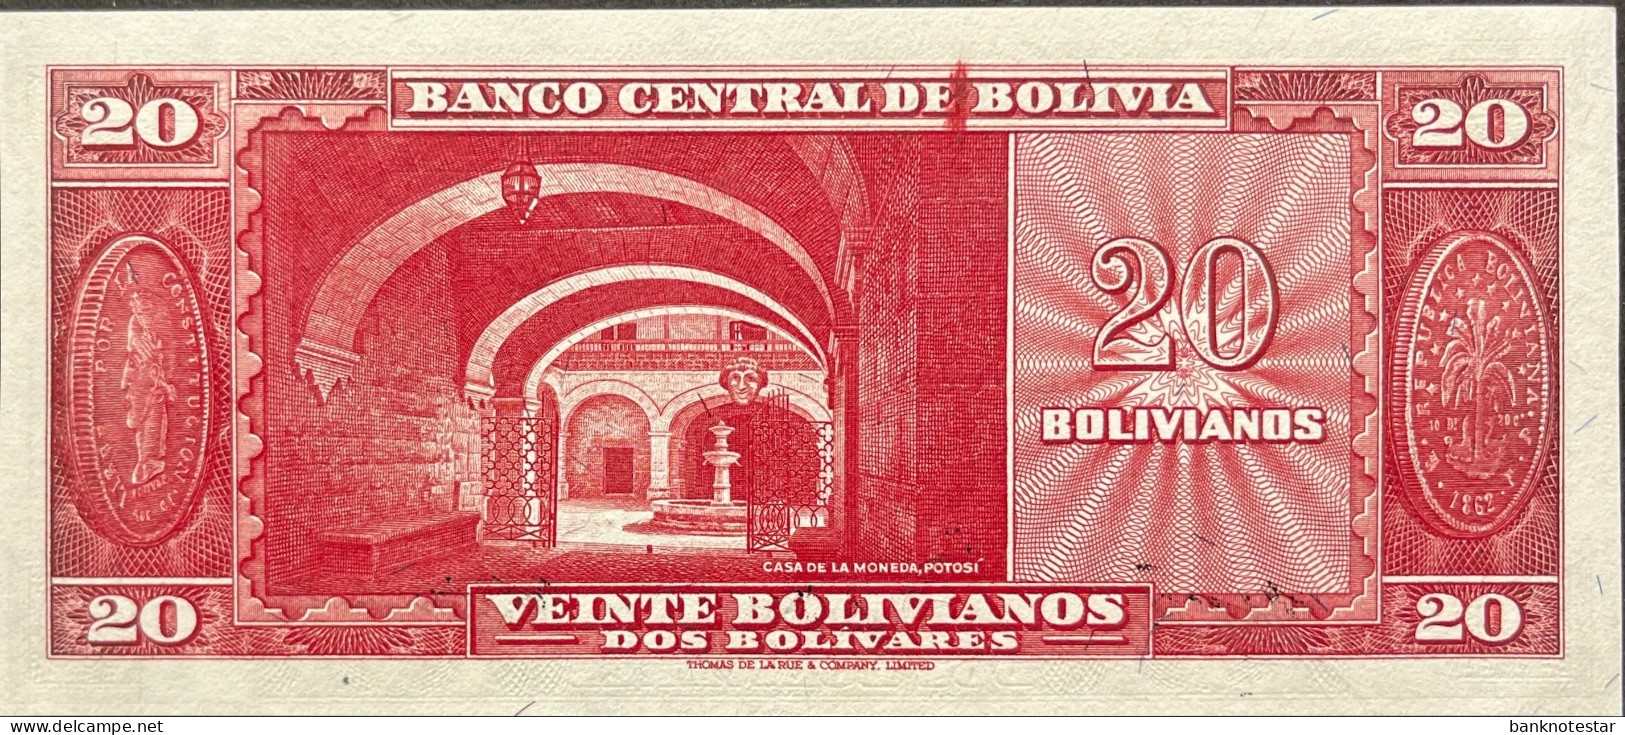 Bolivia 20 Bolivianos, P-140 (L.1945) - UNC - Bolivien